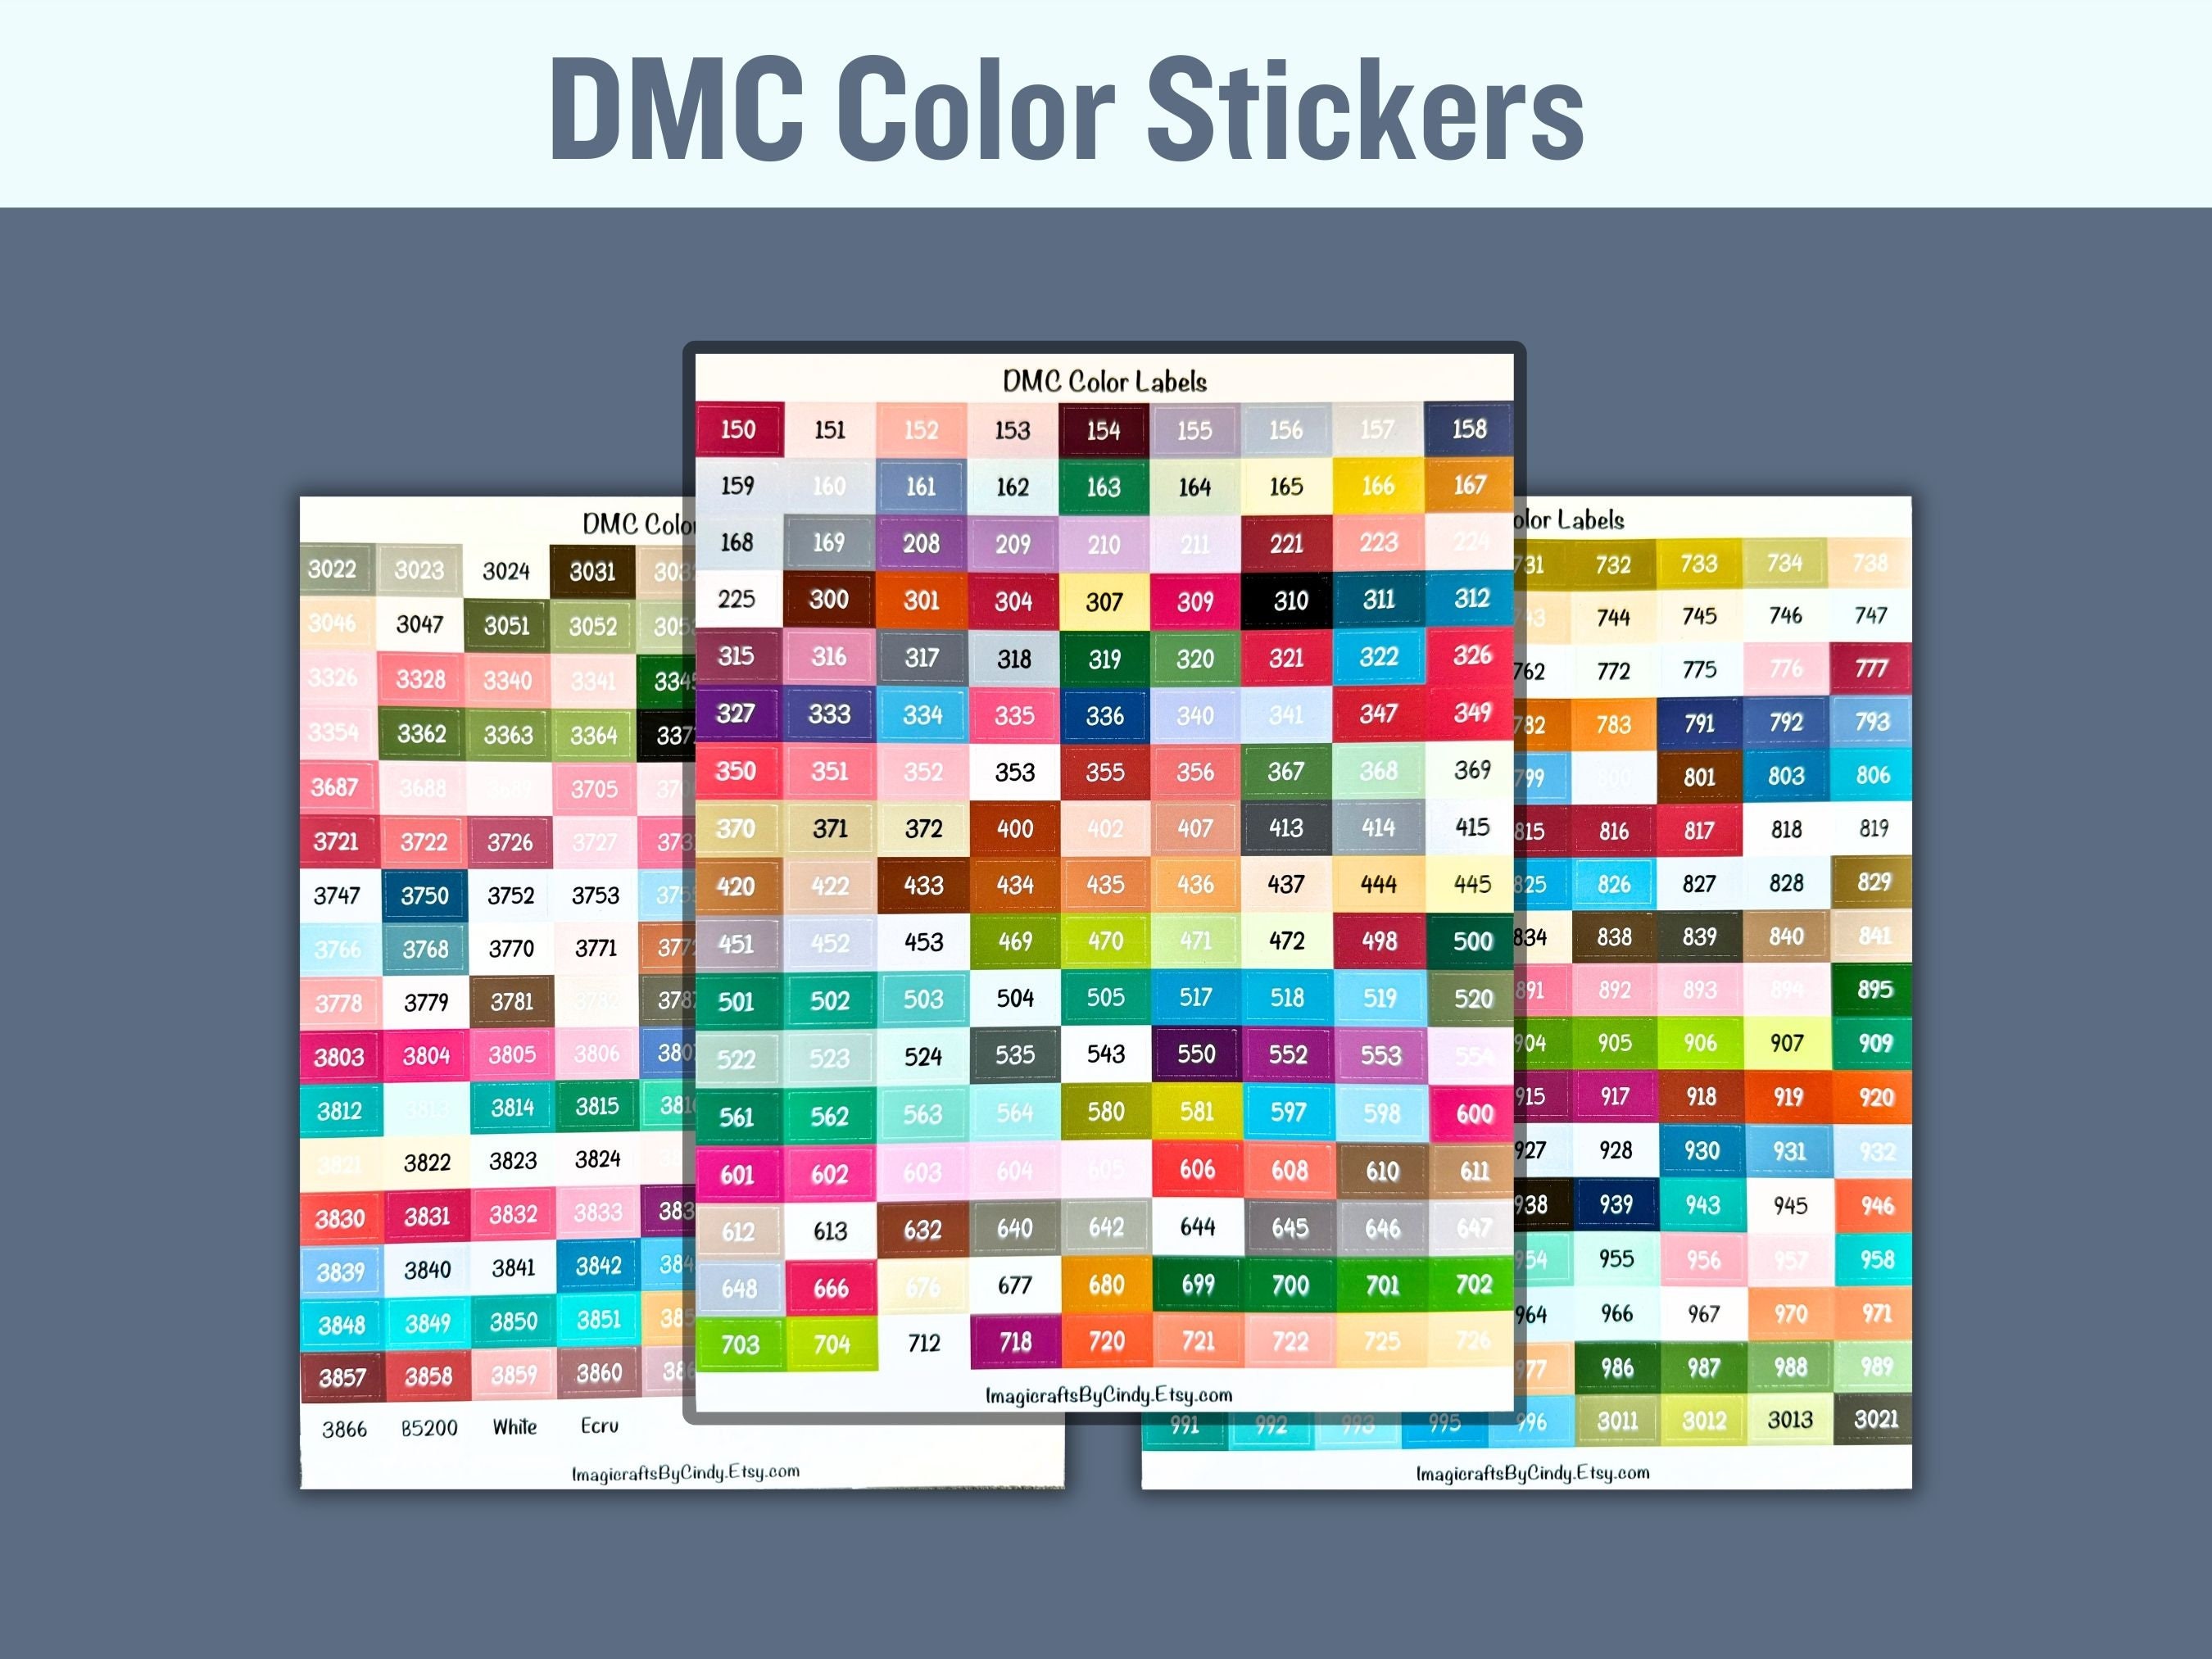 Tiny Round DMC Diamond Painting Labels, 0.5 Inch Round Color DMC